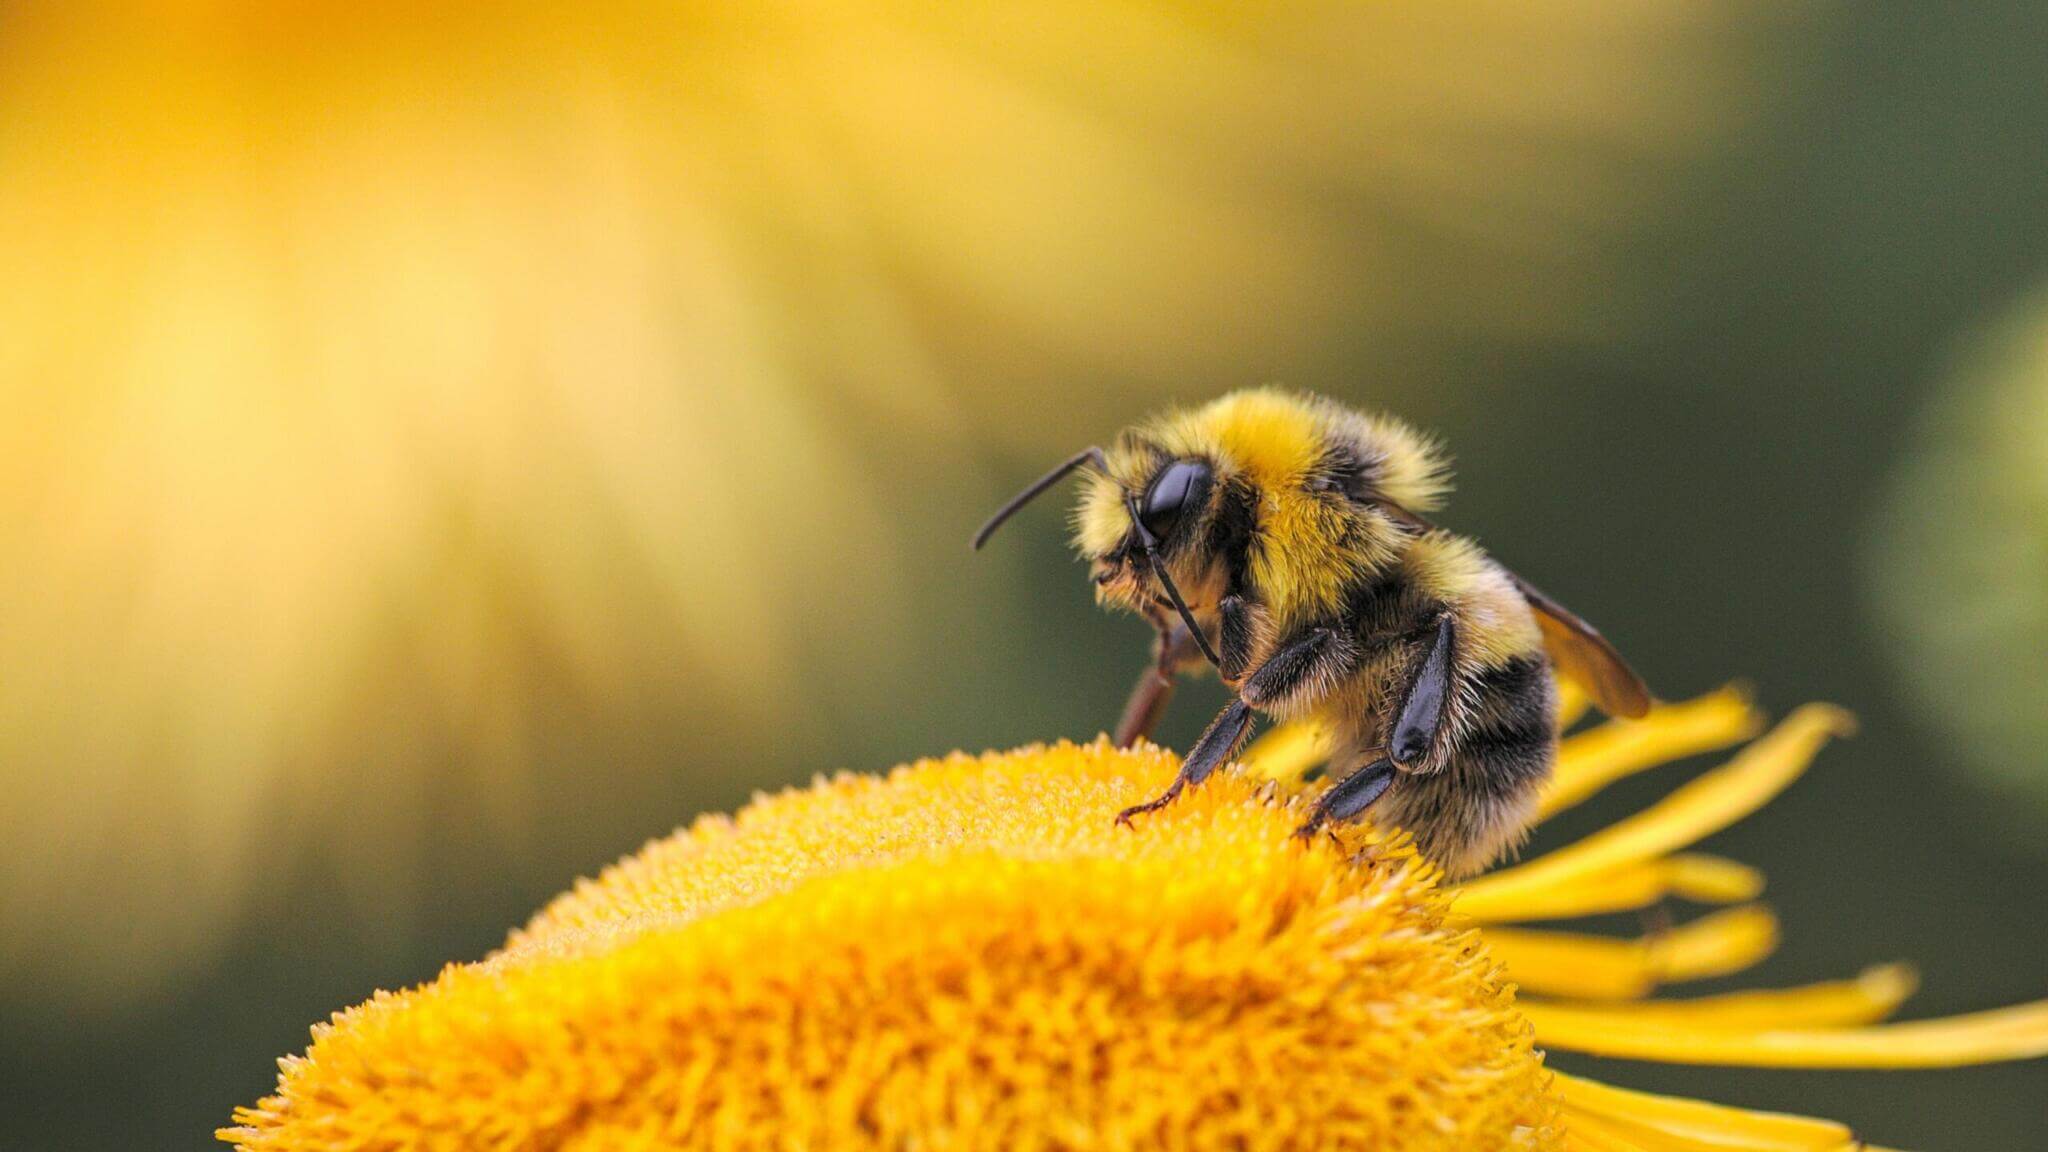 https://investigaciones.petalatino.com/wp-content/uploads/2021/04/WLD-Fuzzy-Bee-Yellow-Flower-NC.jpg